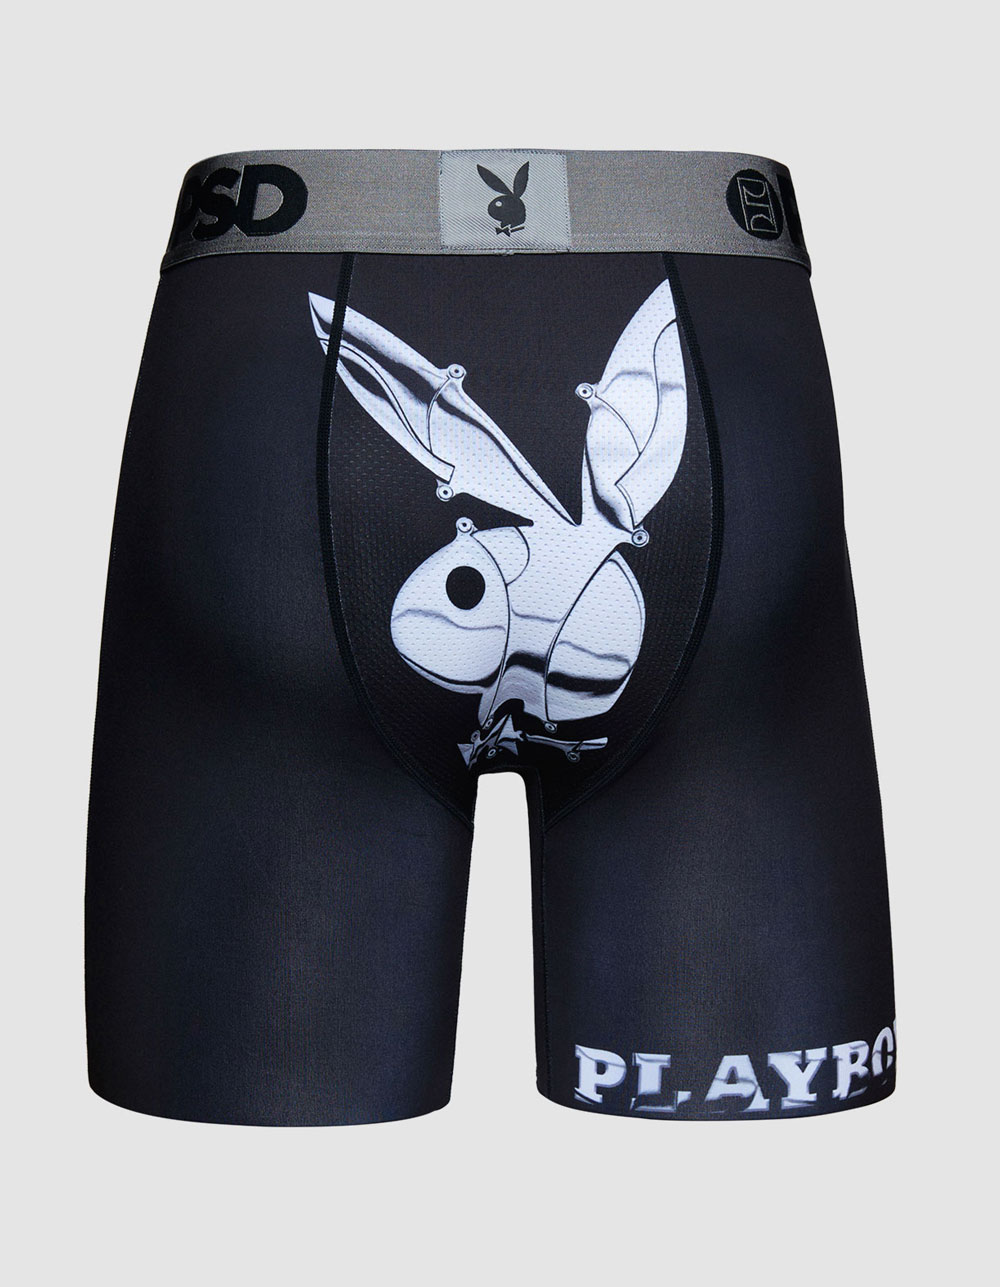 PSD Playboy Warp Checks Bunny Sexy Underwear Checkered Boxer